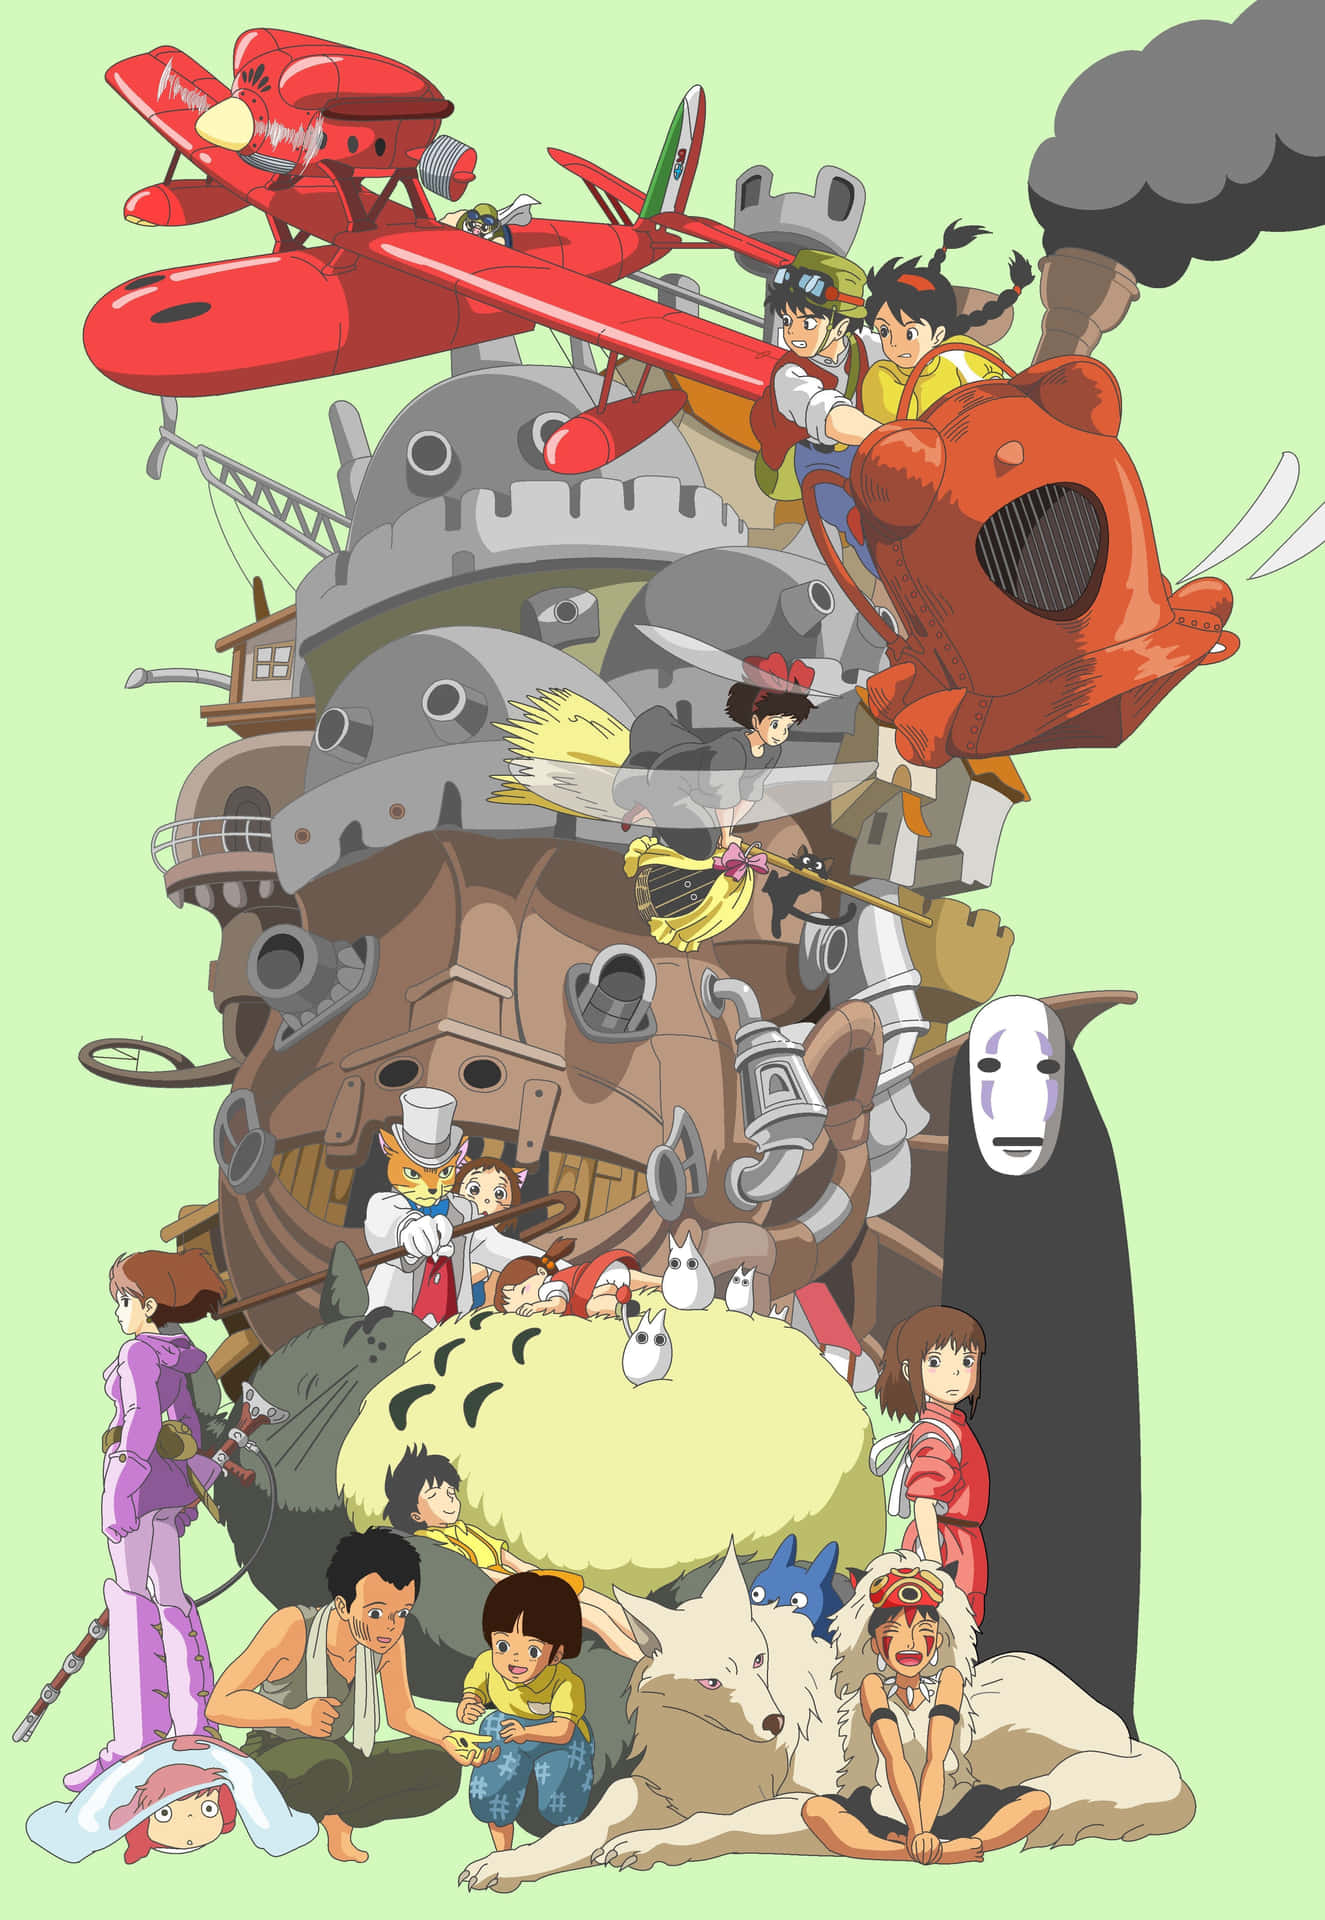 Enchanting Studio Ghibli Art with Spirited Away Characters Wallpaper